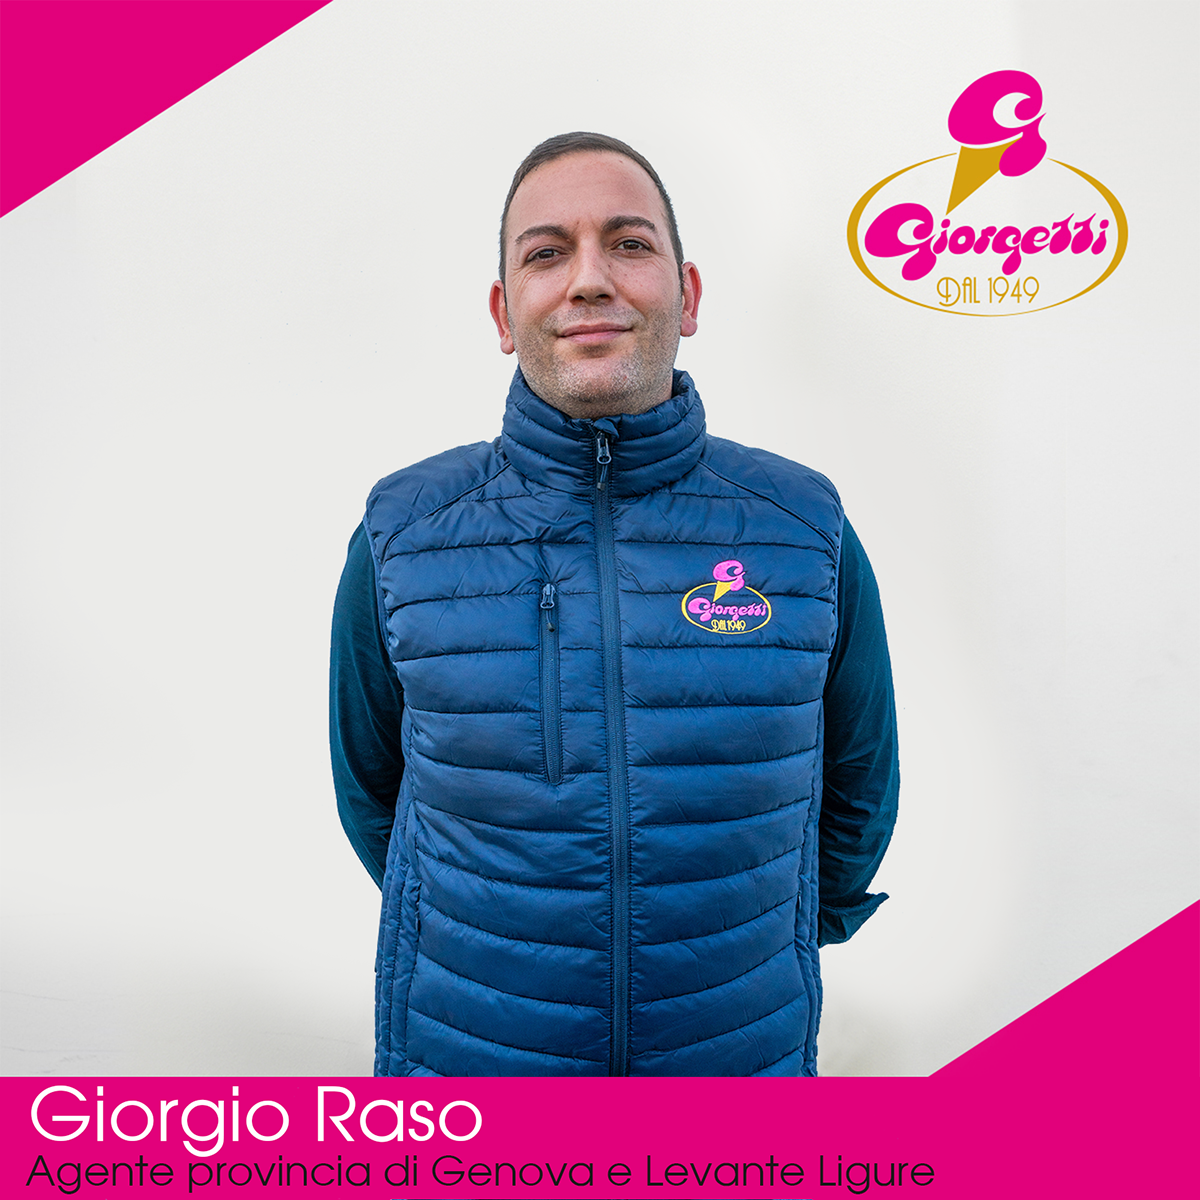 Giorgio Raso